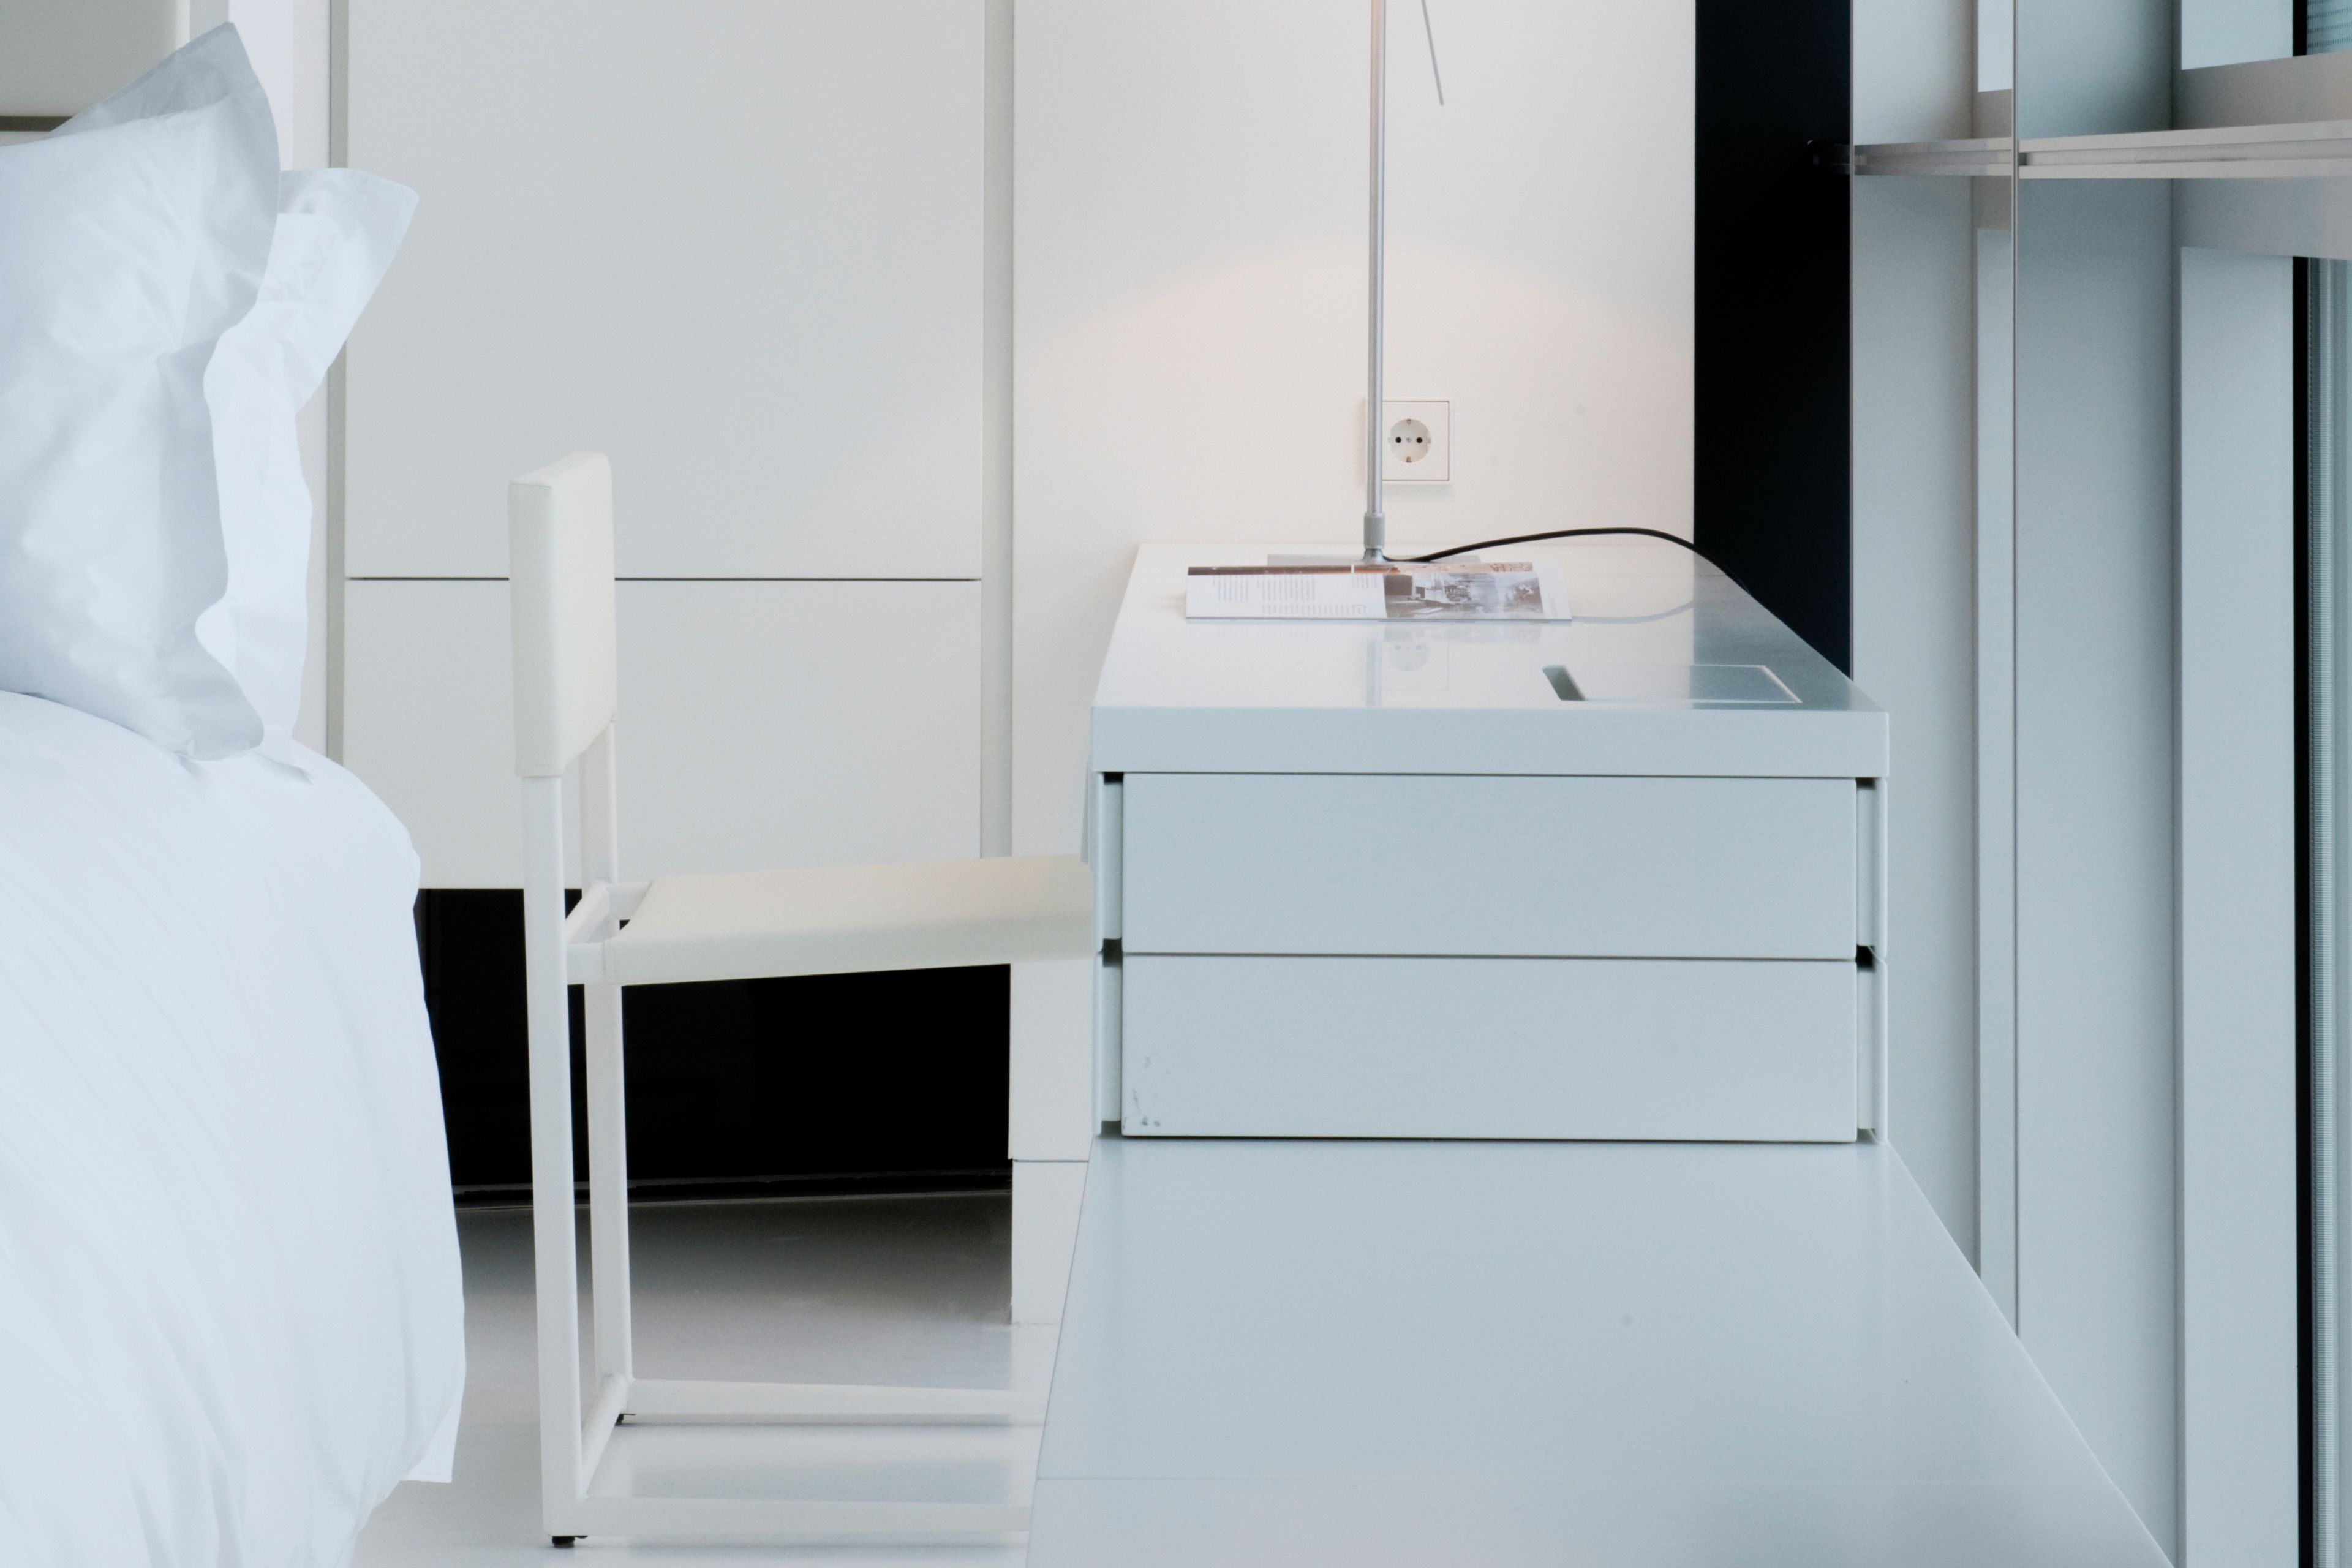 Sika ComfortFloor® white floor in bedroom with desk and lamp